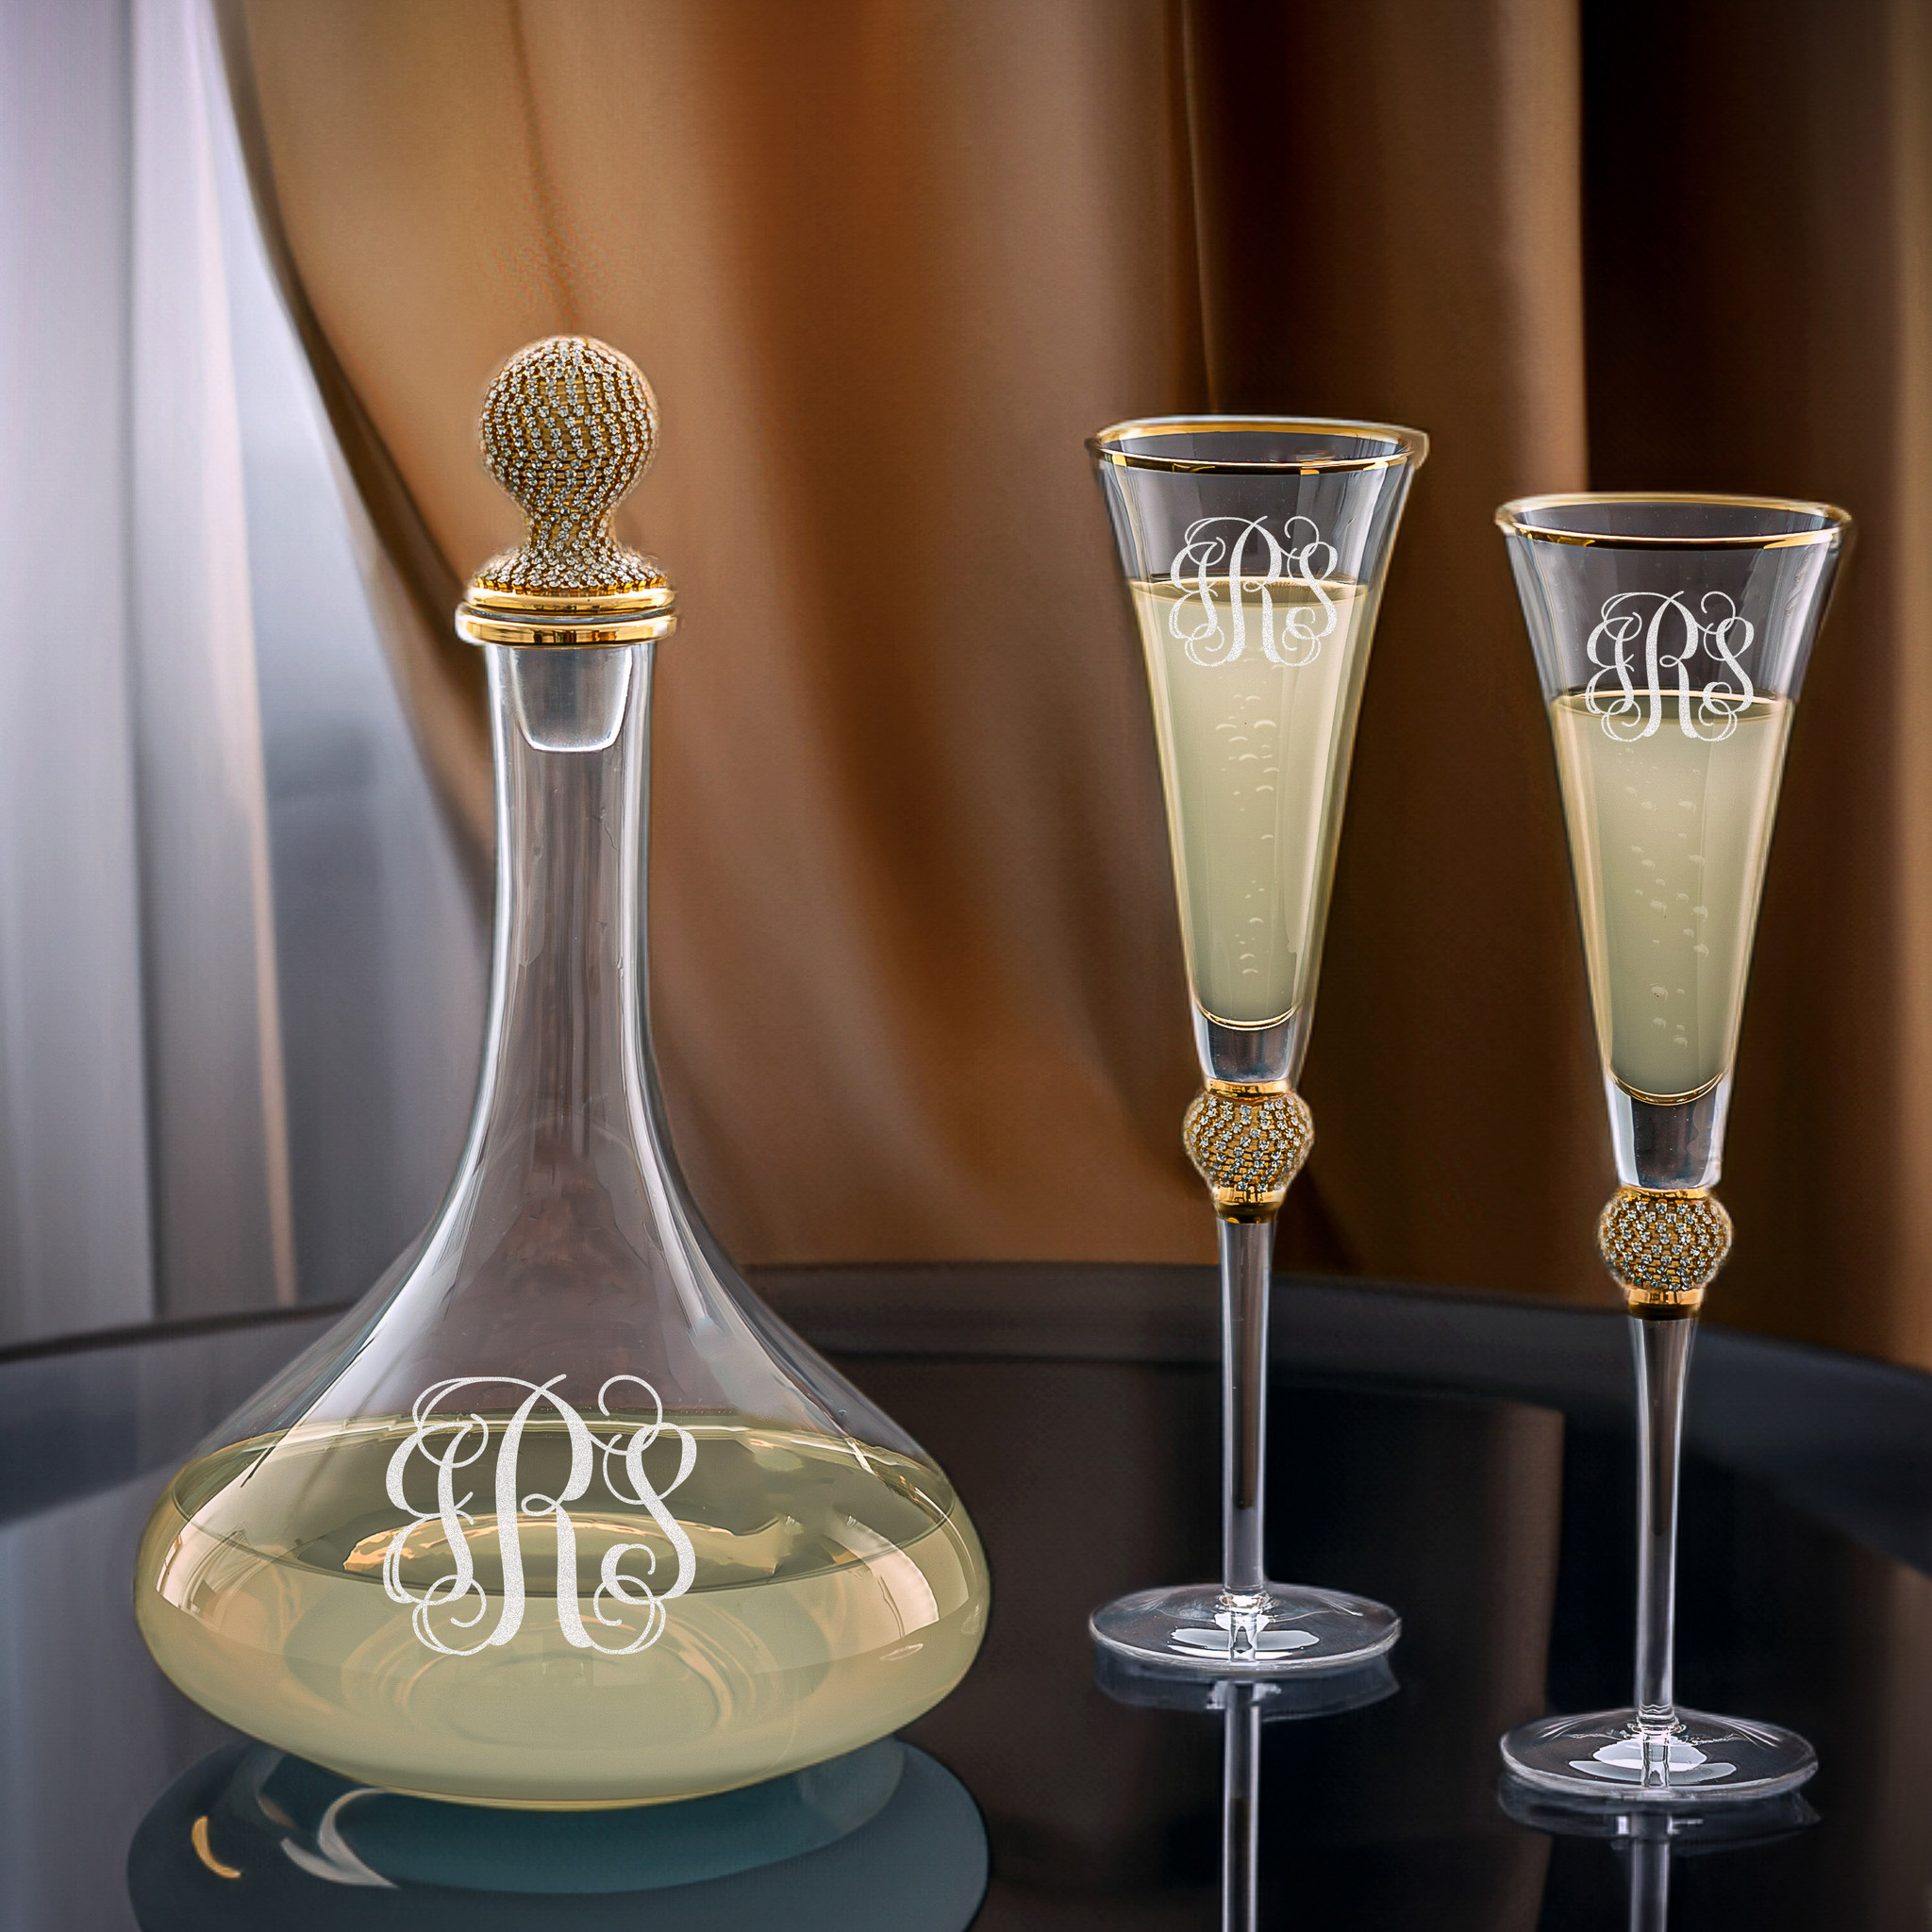 Silver Wine Glasses Champagne, Champagne Cocktail Glasses